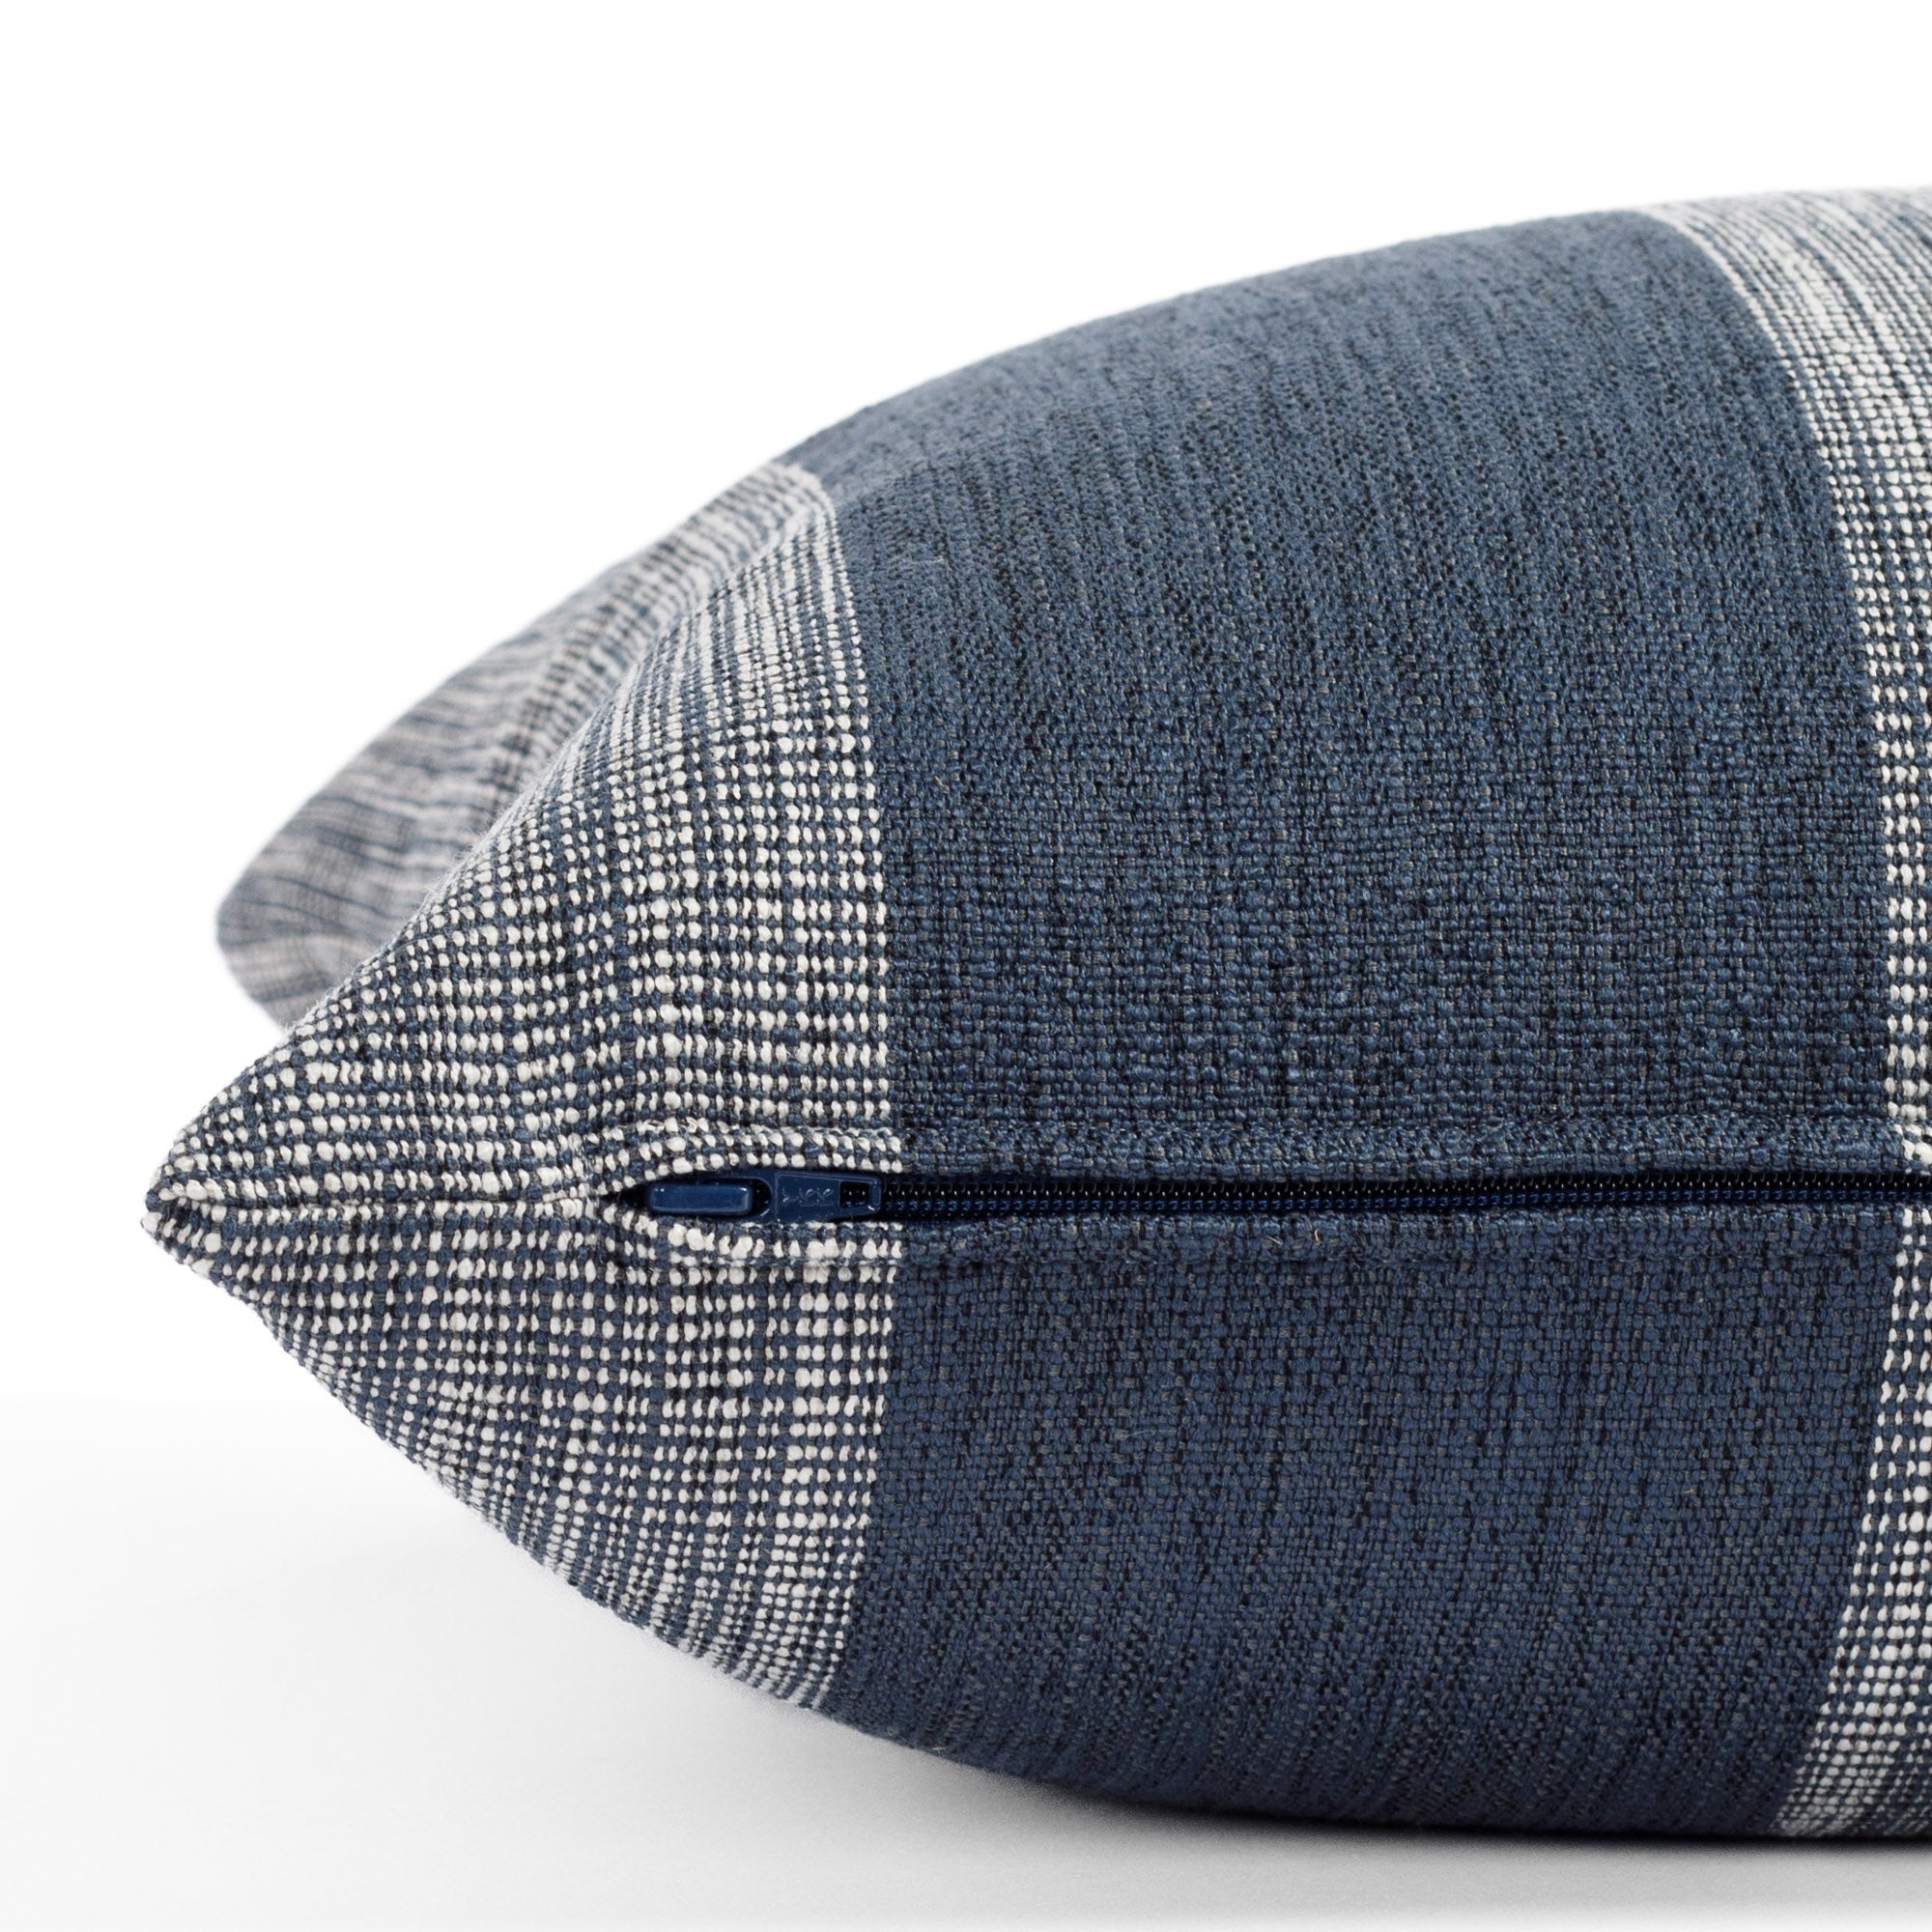 an indigo blue and white striped pillow : close up zipper detail